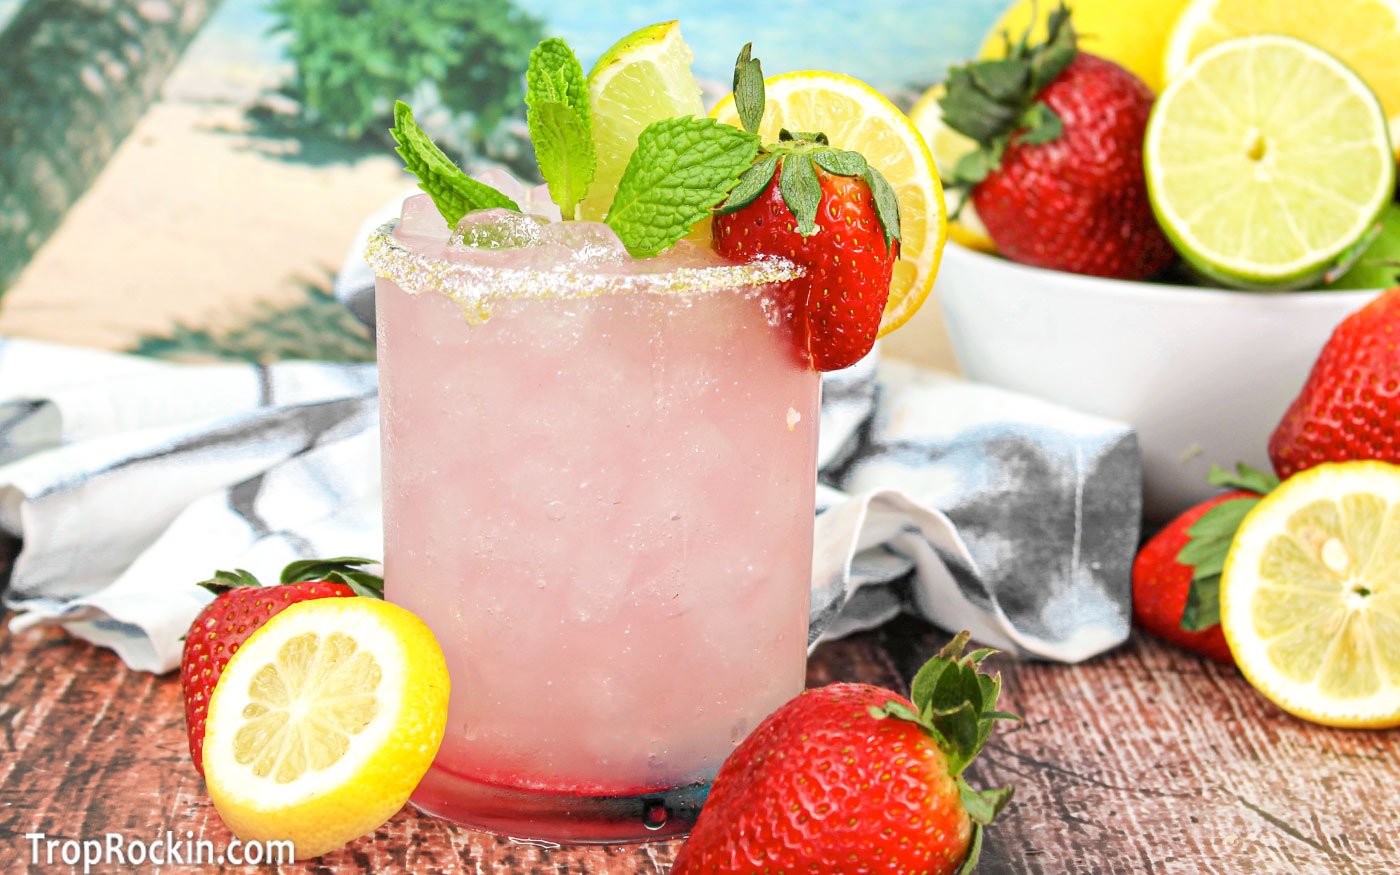 Strawberry Lemonade Margarita